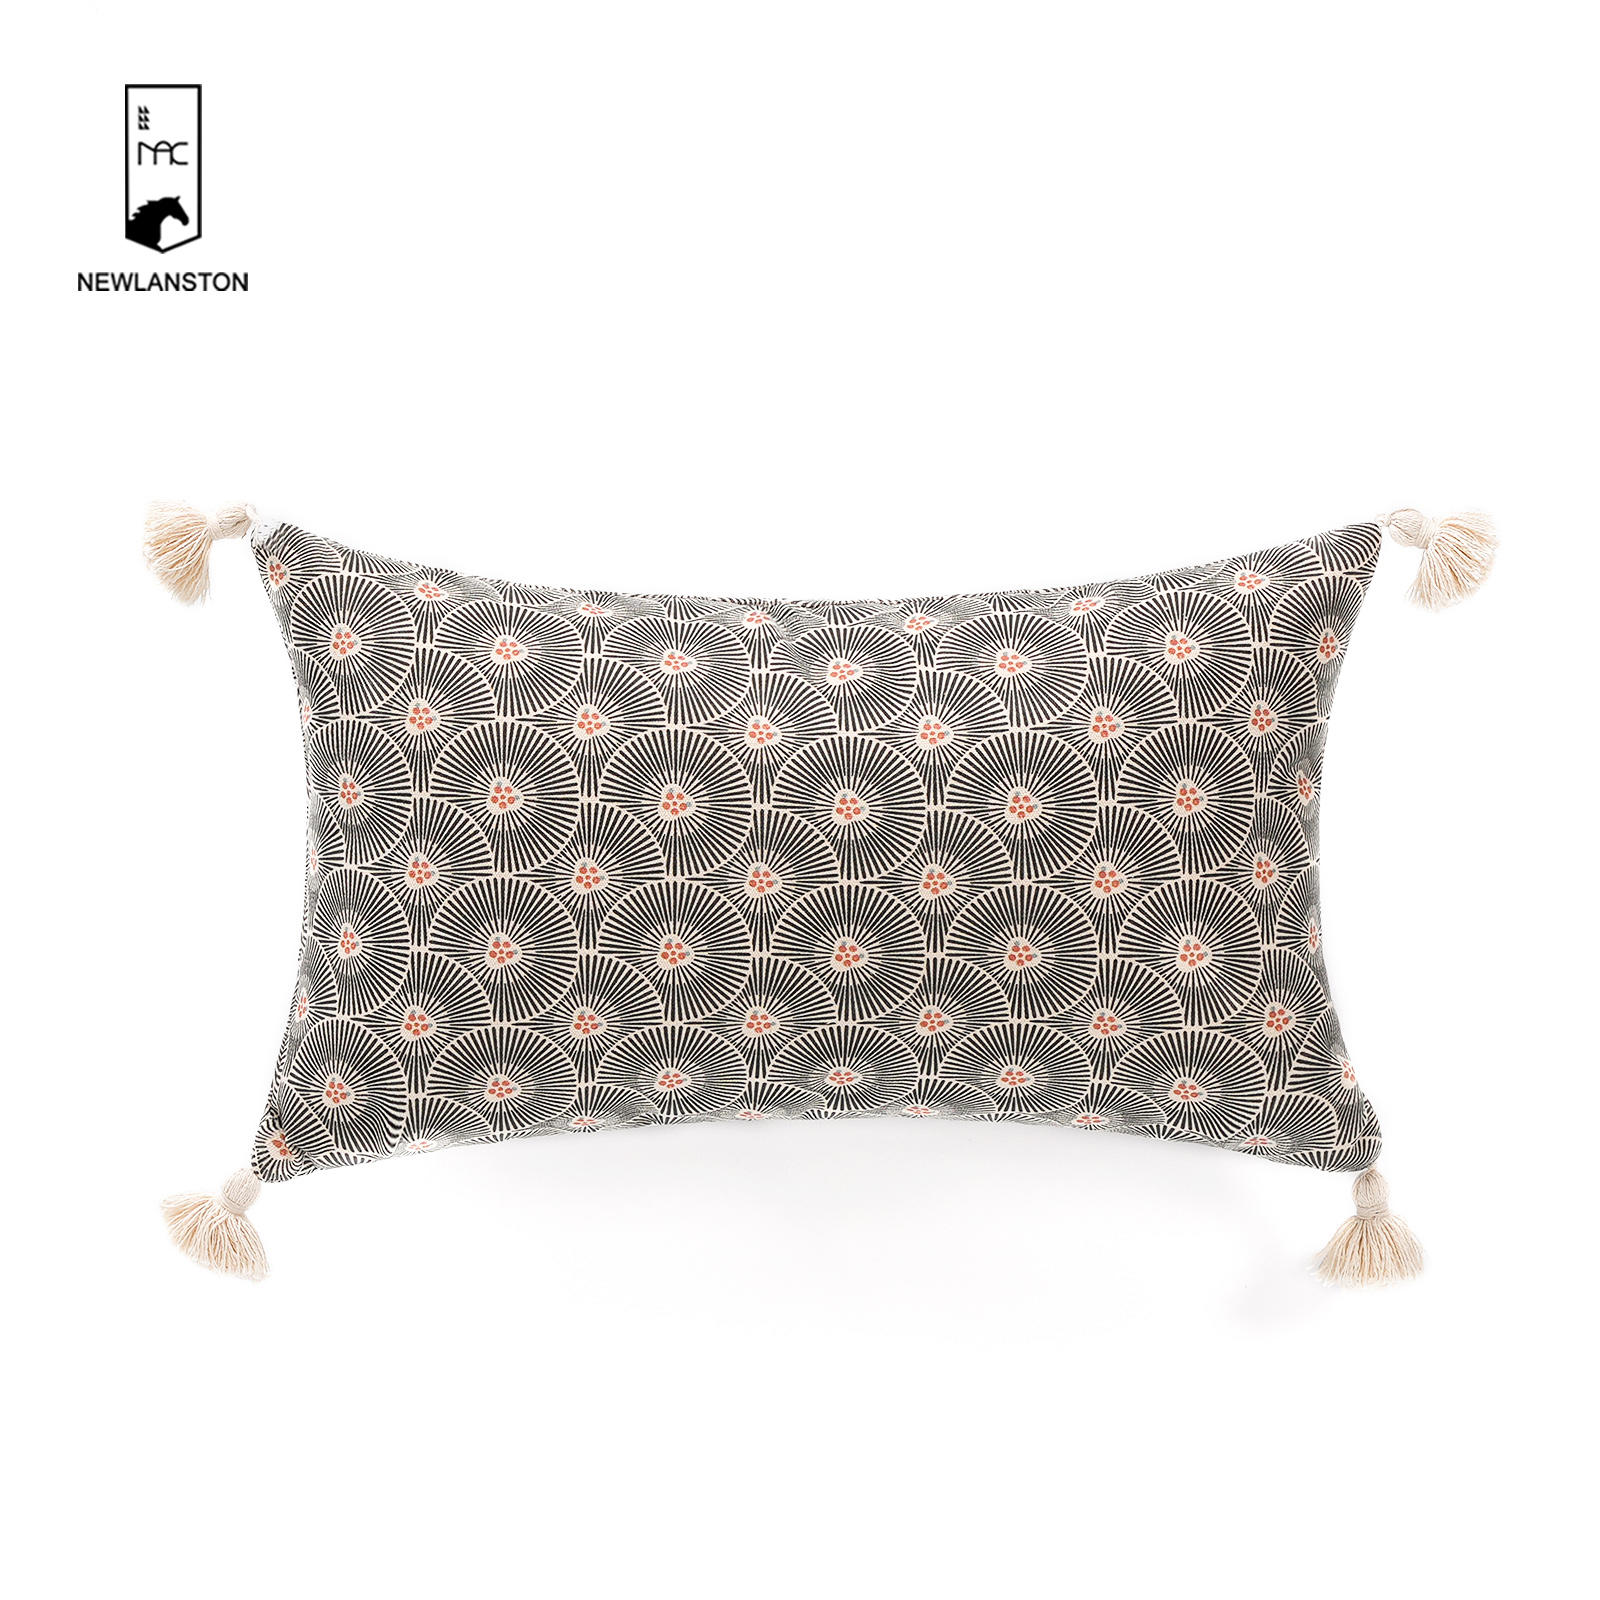 45x45 Digital printing cotton Geometric style Cushion cover 